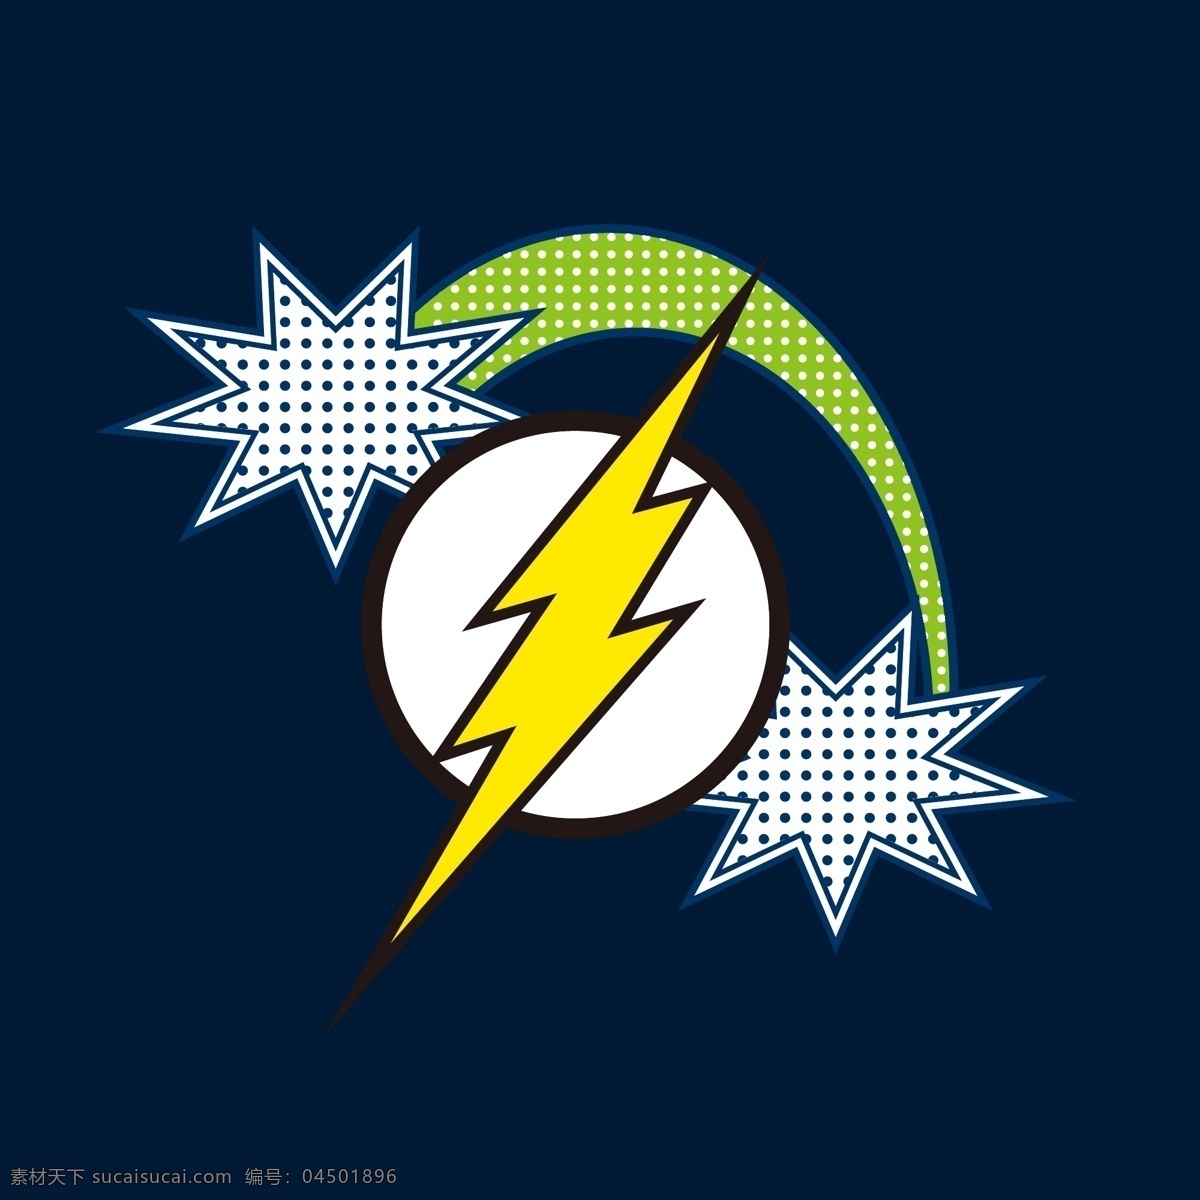 flash superman 蝙蝠侠 标识标志图标 标志 超人 卡通形象 其他人物 矢量人物 闪电 侠 矢量 模板下载 闪电侠标志 batman 闪电侠 华纳 dc漫画 超级英雄 英雄联盟 超人英雄标志 小图标 网页素材